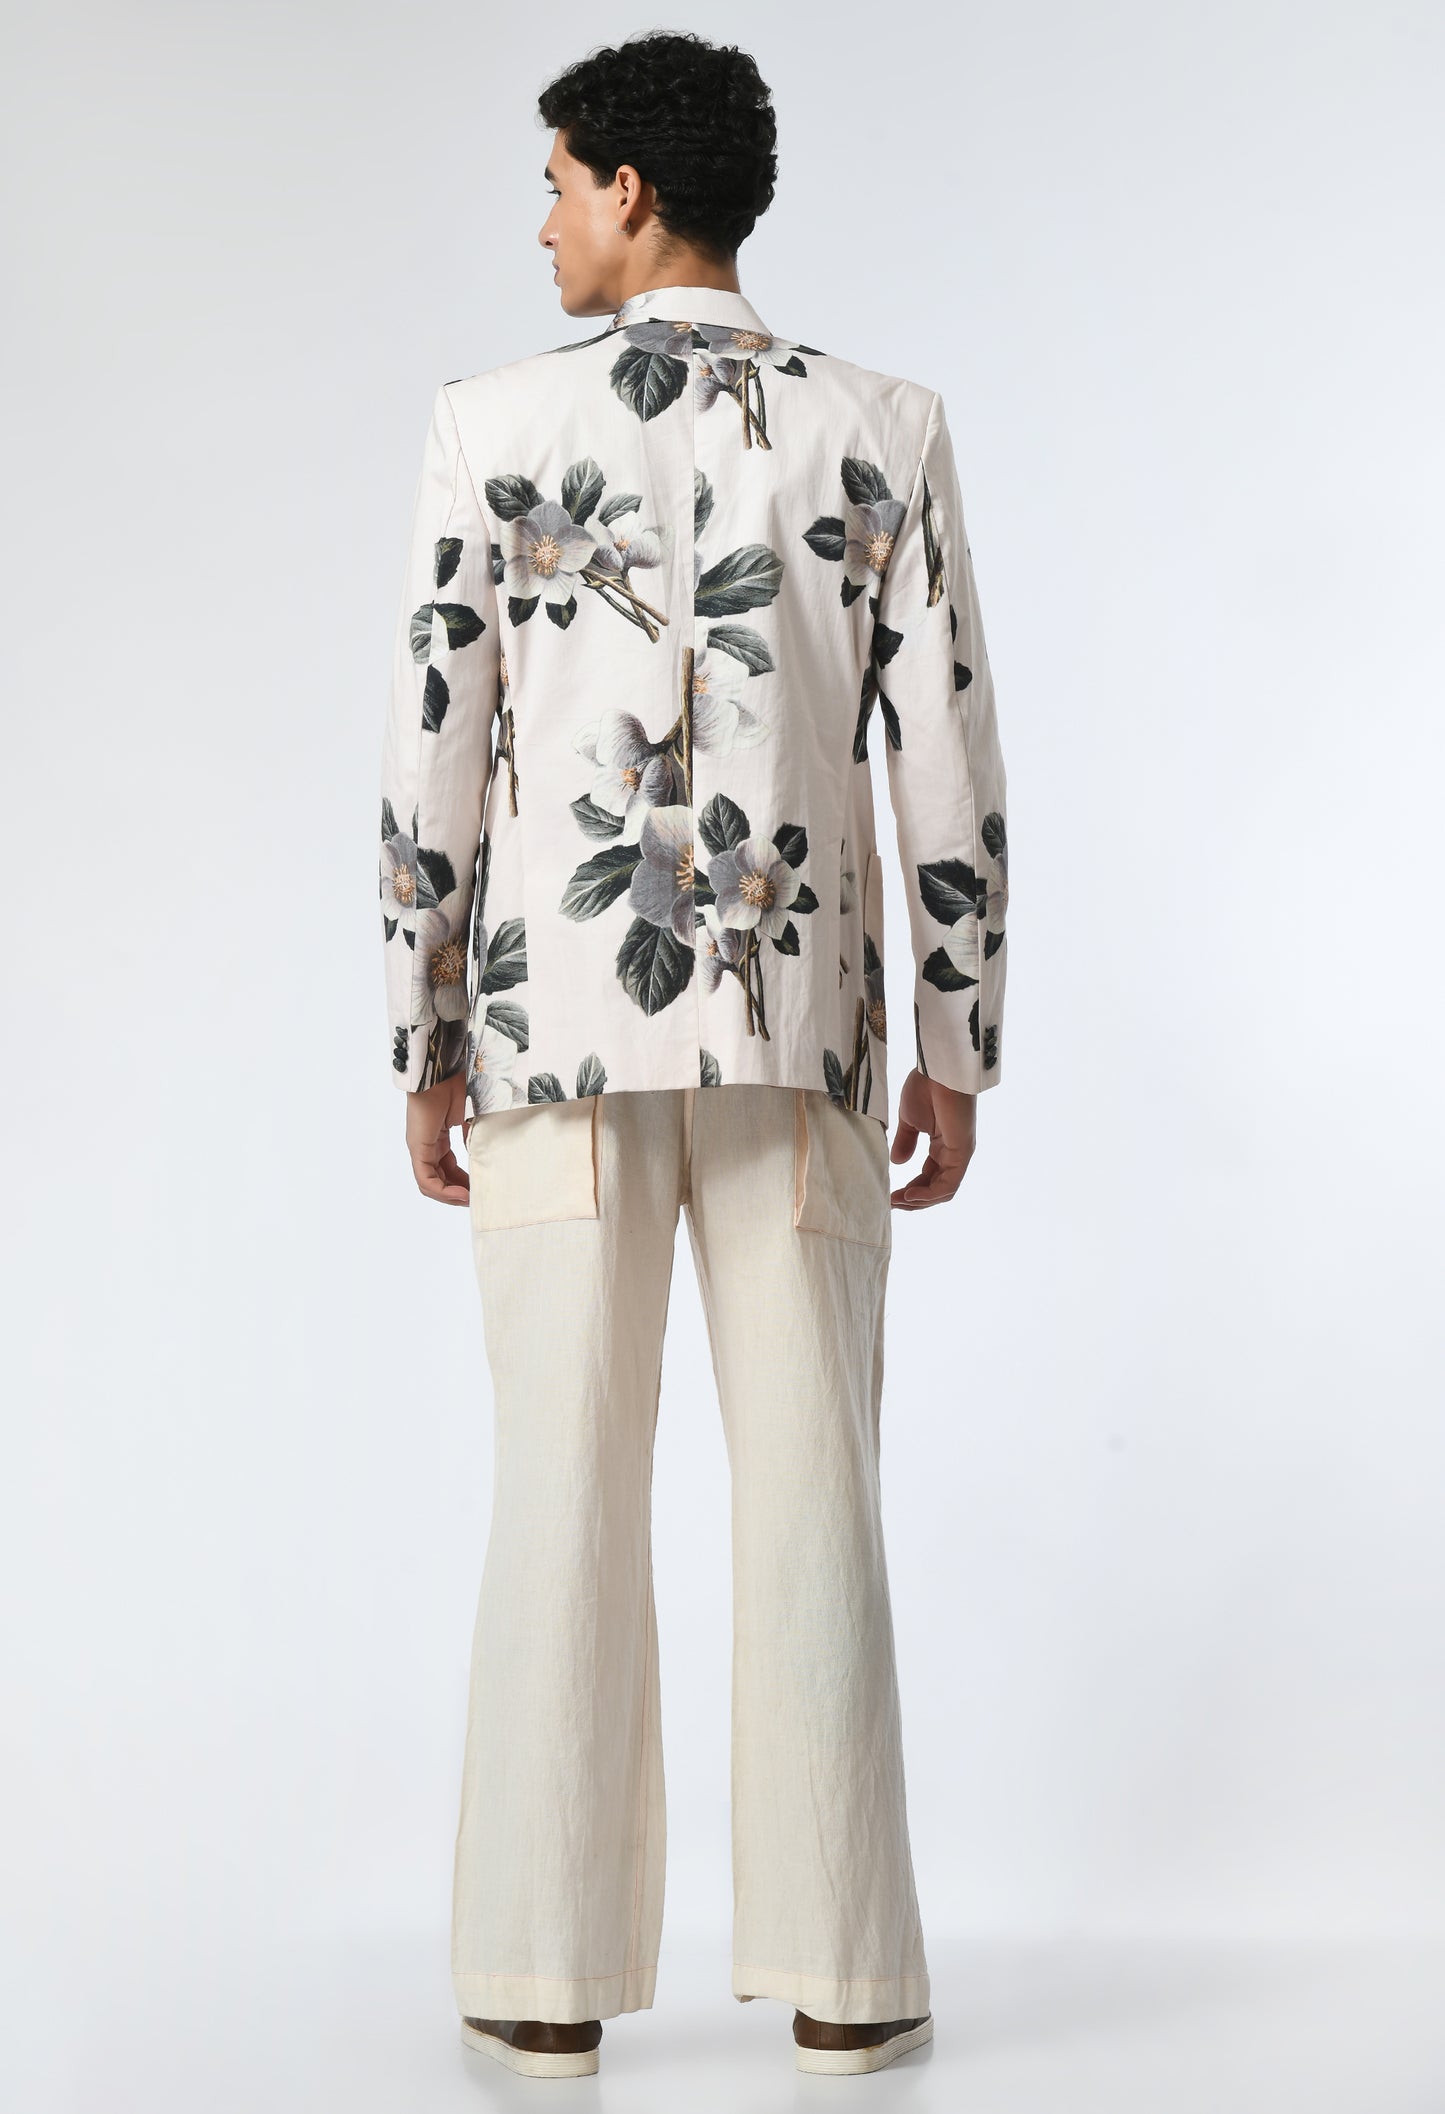 Men's blazer set with floral print.